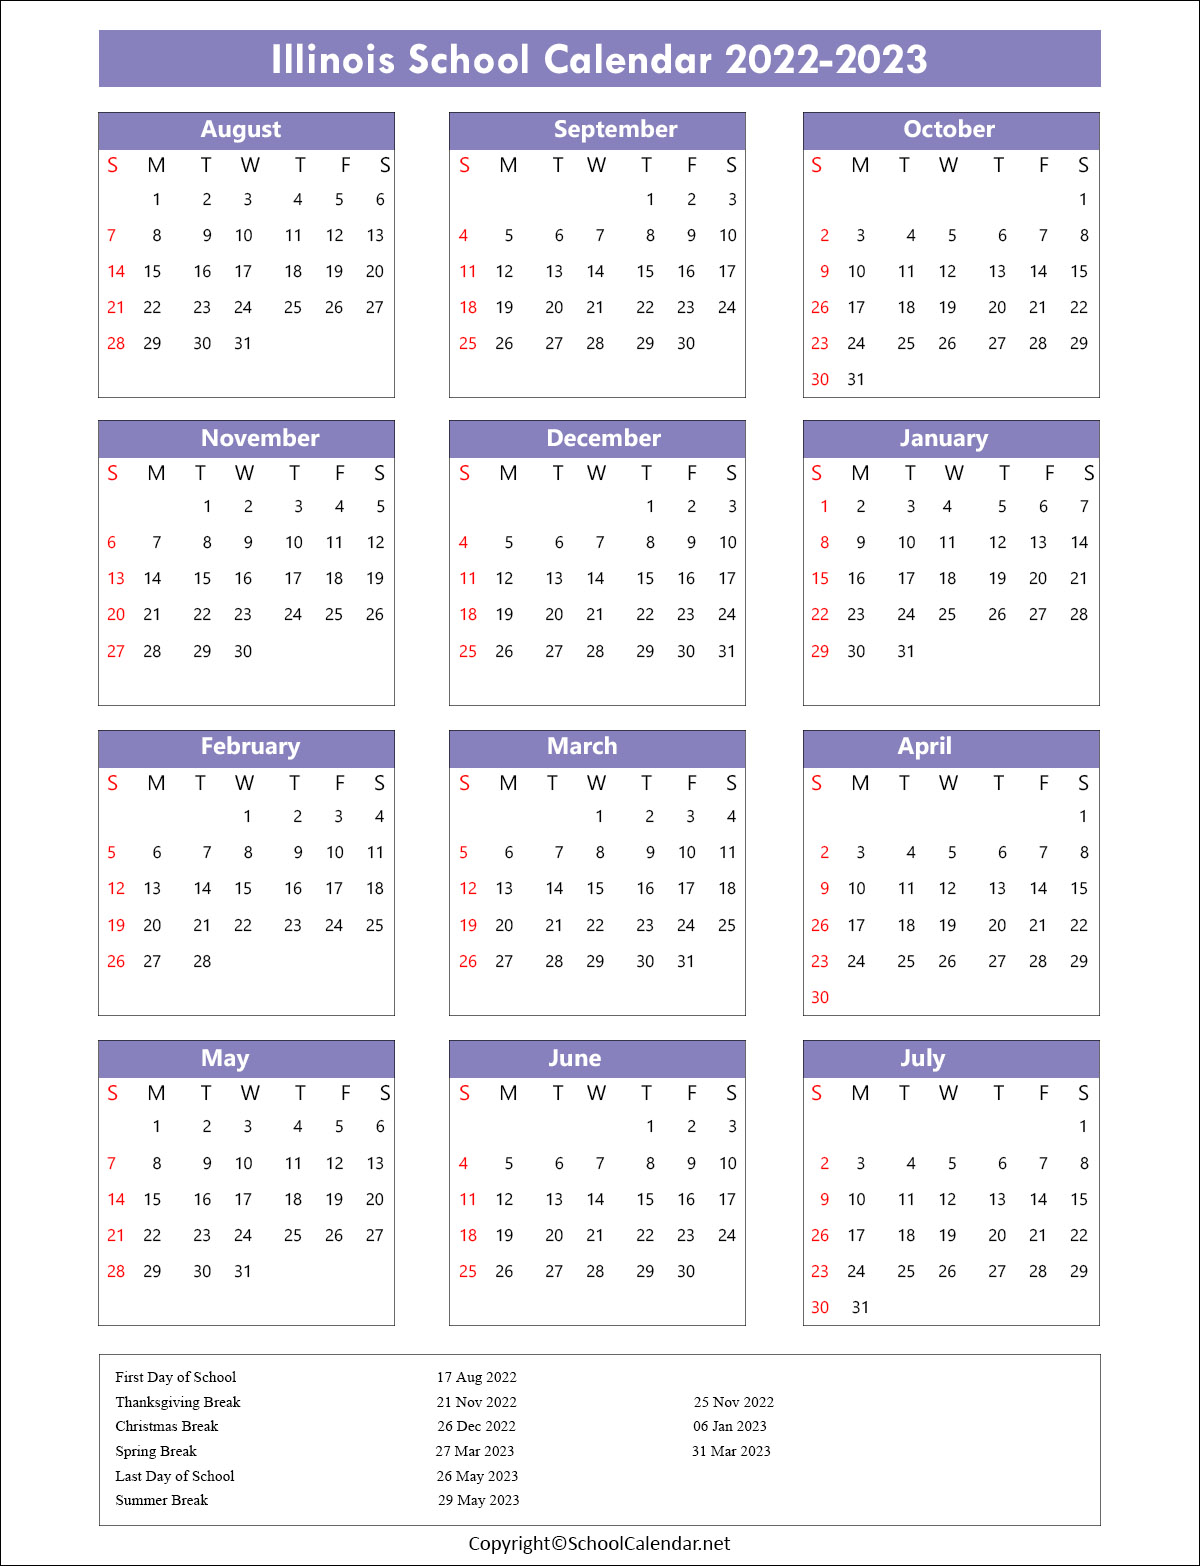 Illinois School Calendar 2022